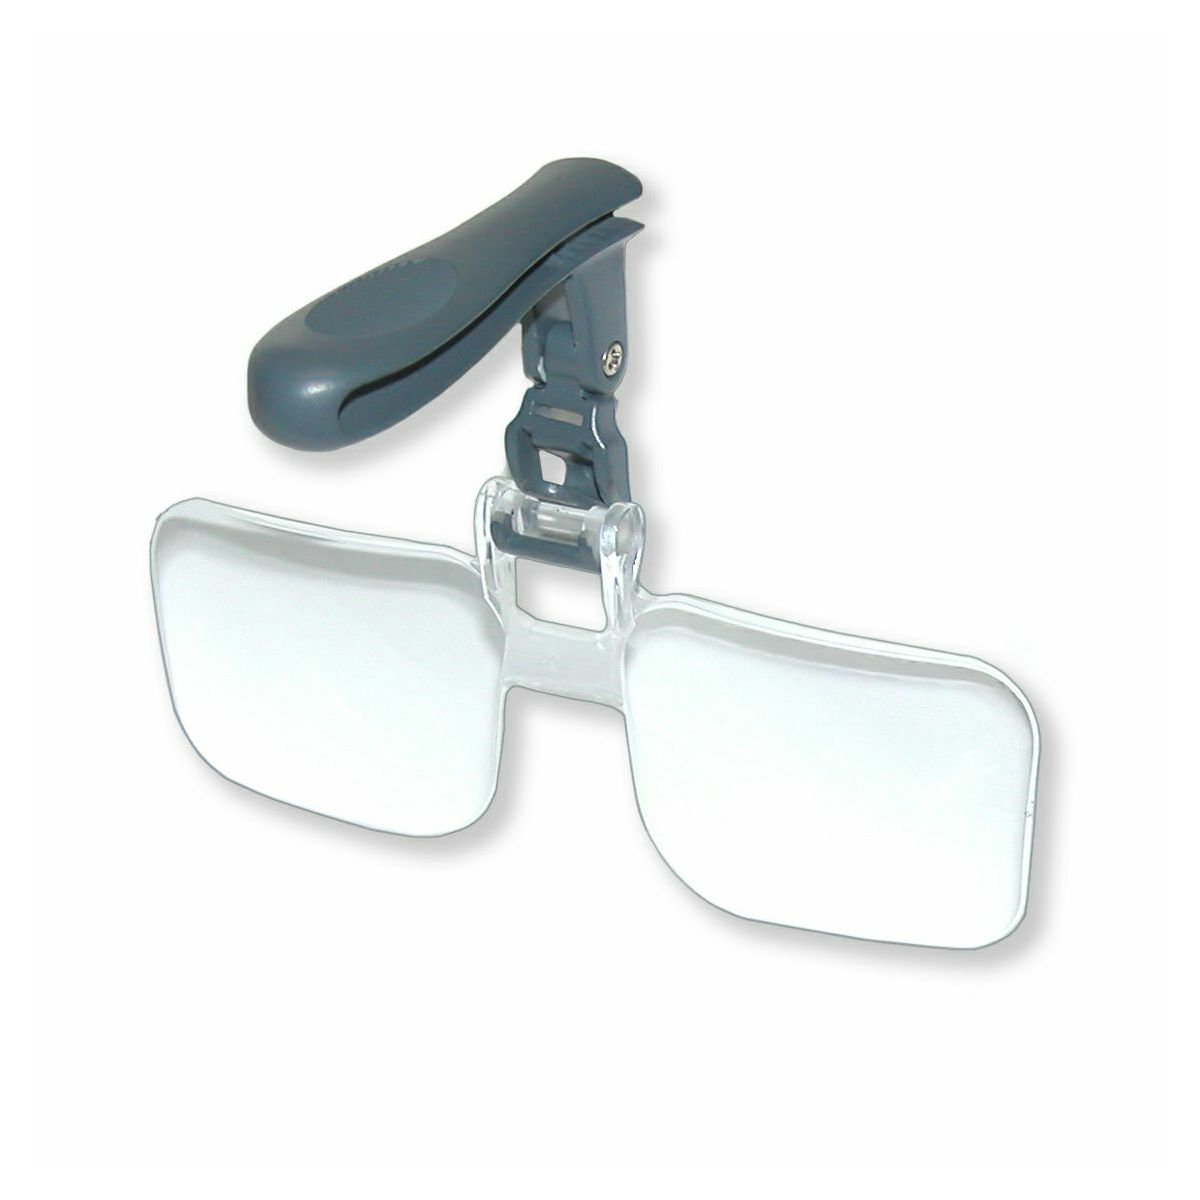 Green Clean Clip & Flip The hands free magnifier akrilne leće s 1,75x povećanjem za pregled prilikom čišćenja opreme i senzora (SC-0500)